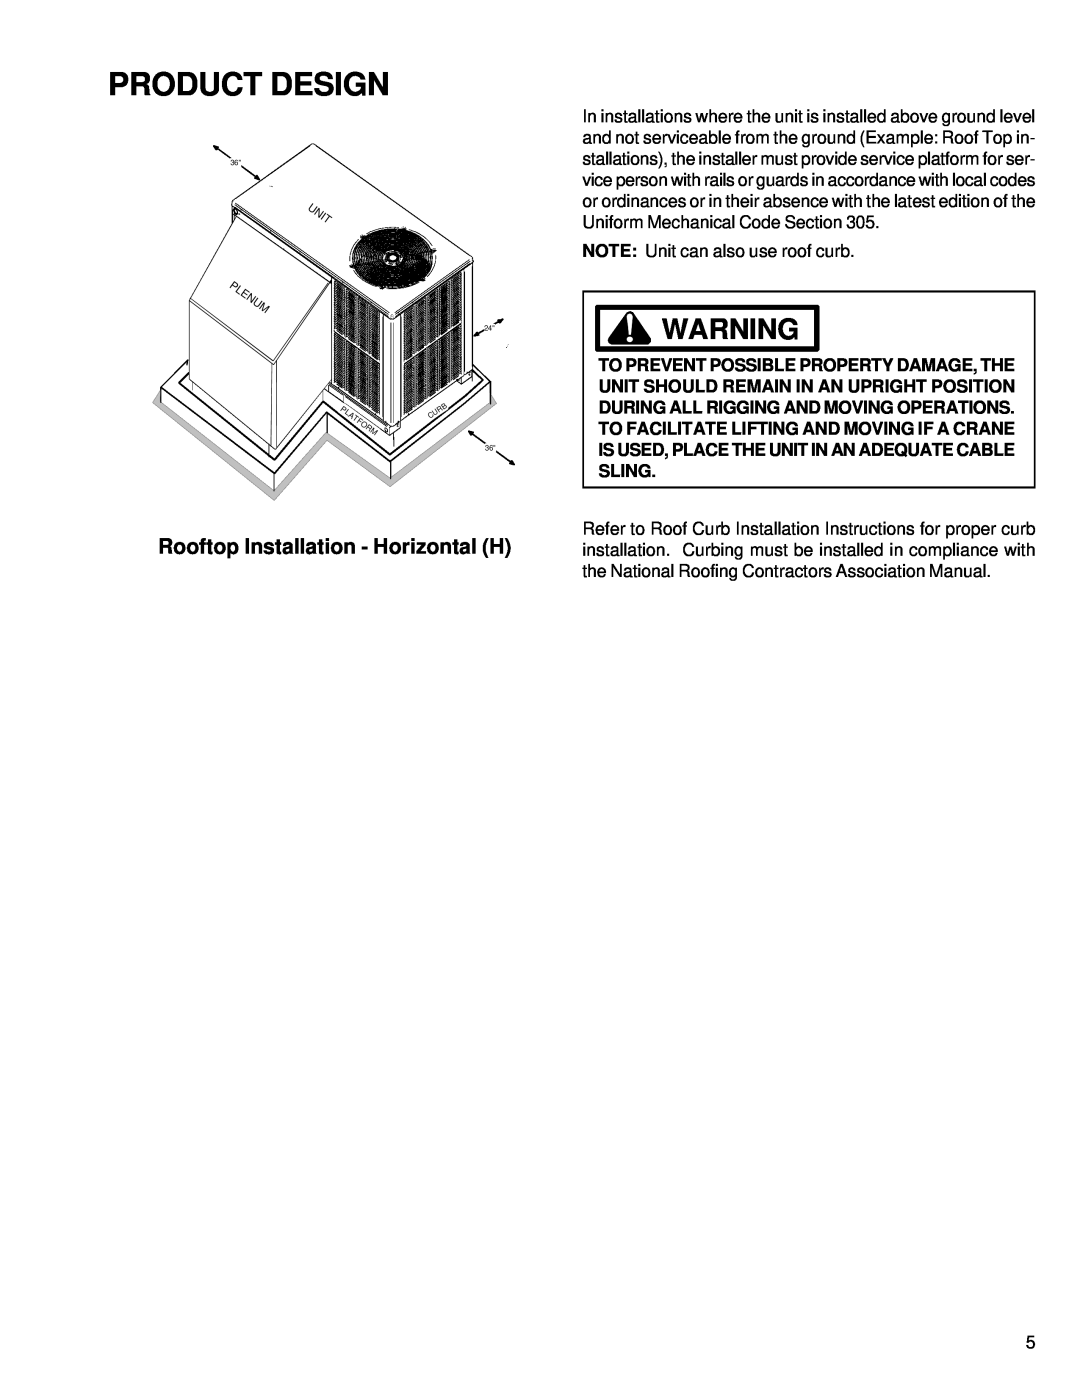 Goodman Mfg R-410A service manual Rooftop Installation - Horizontal H, Product Design 